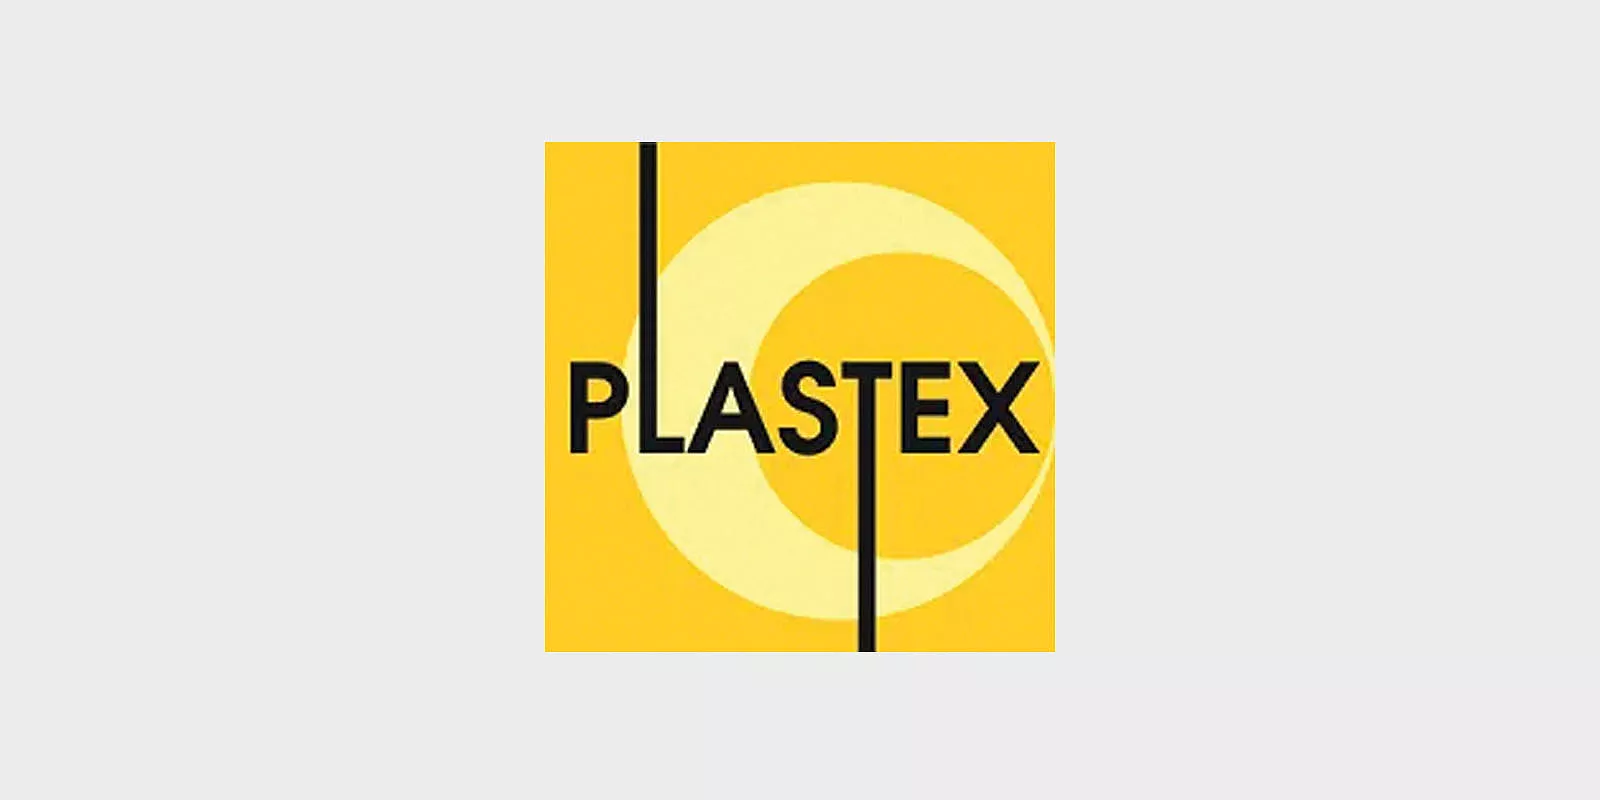 PLASTEX Brno